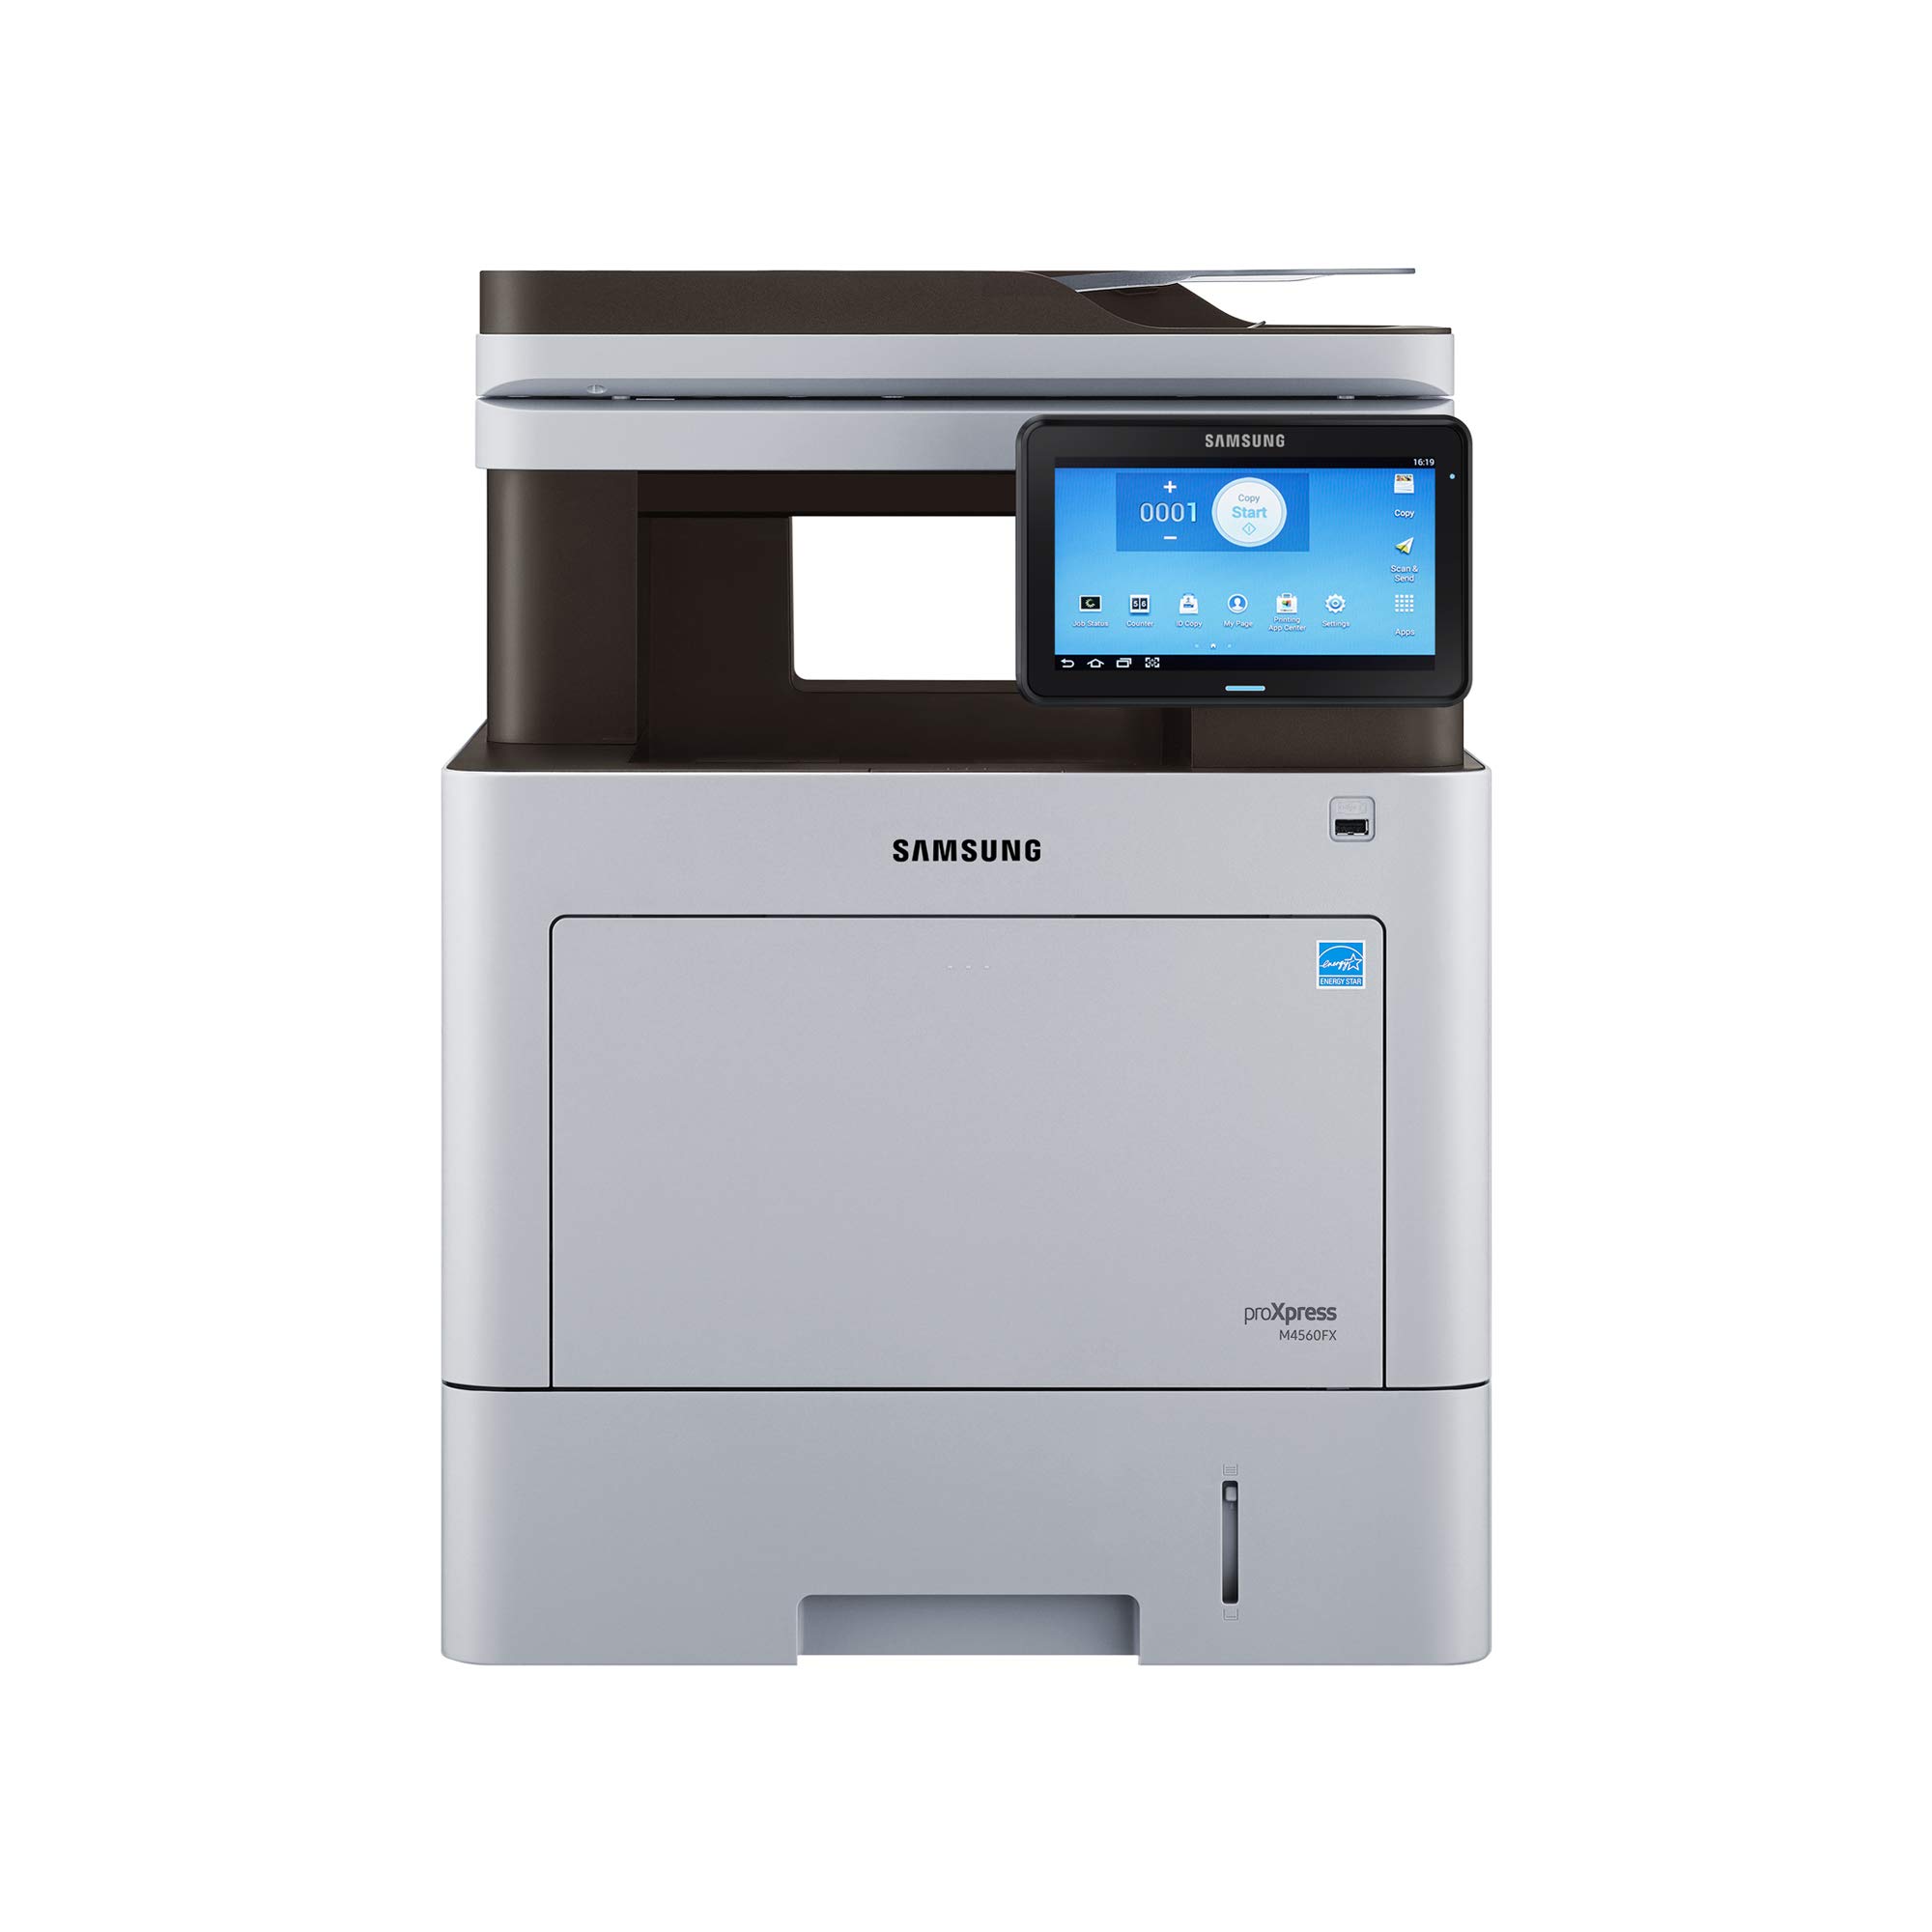 Samsung ProXpress SL-M3375 Laser Multifunction Printer series